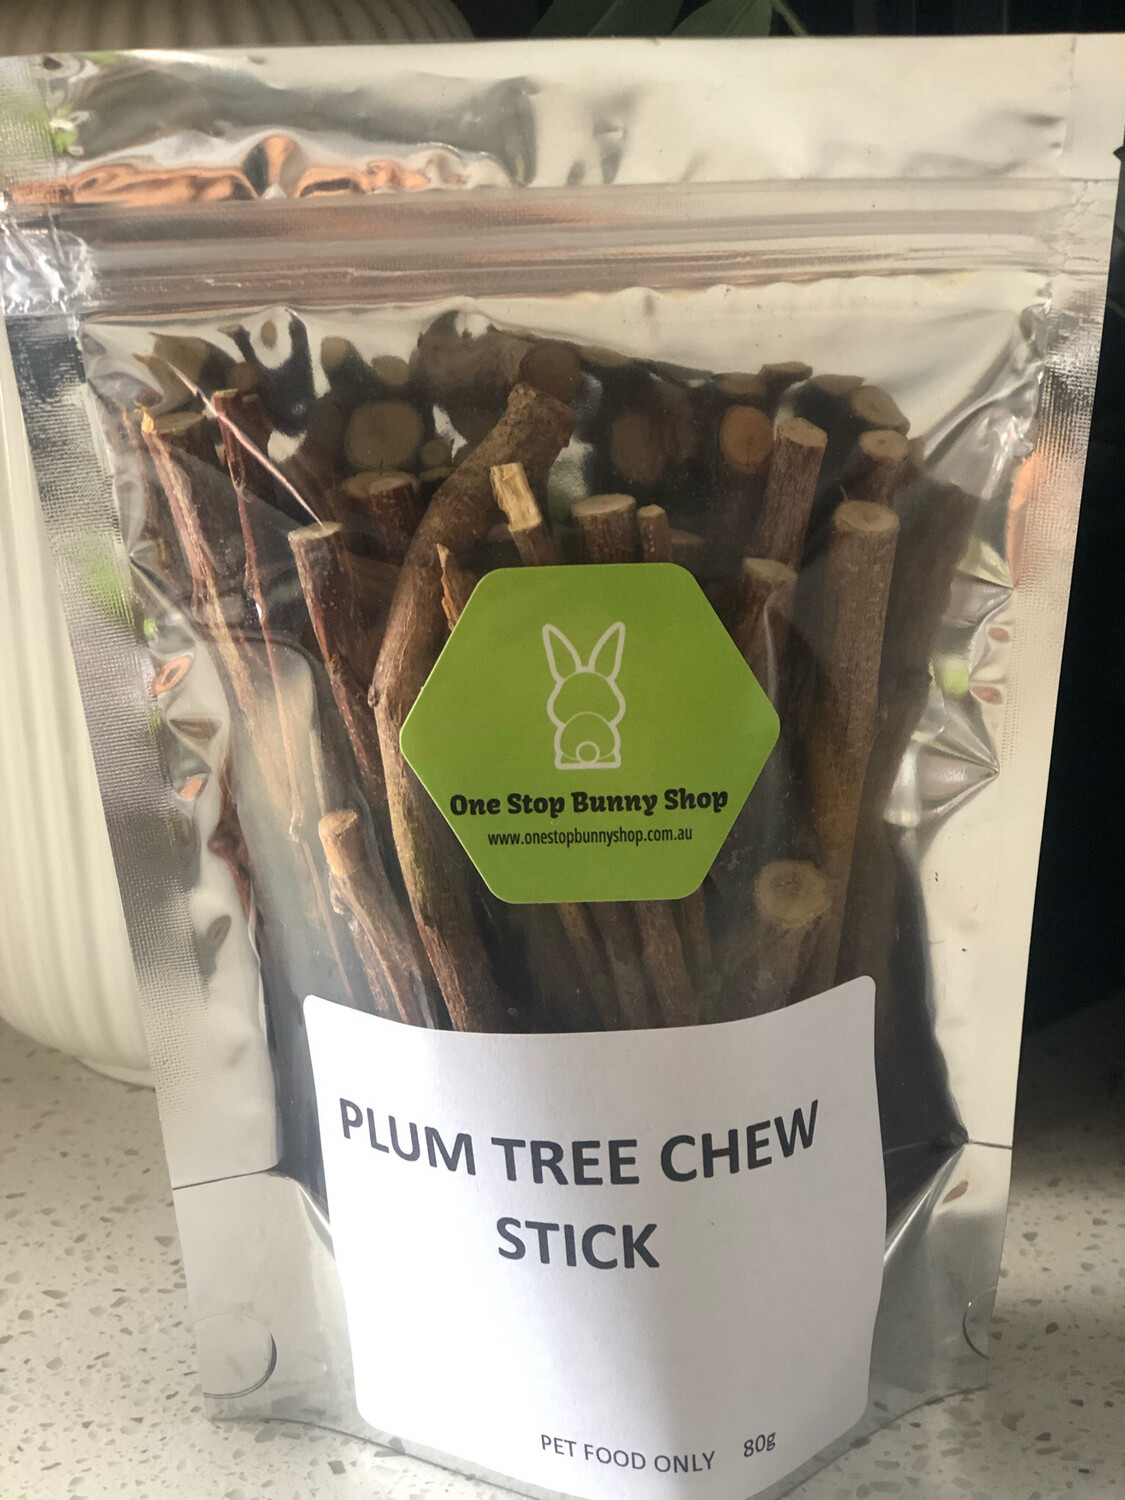 Plum tree chew stick 80g